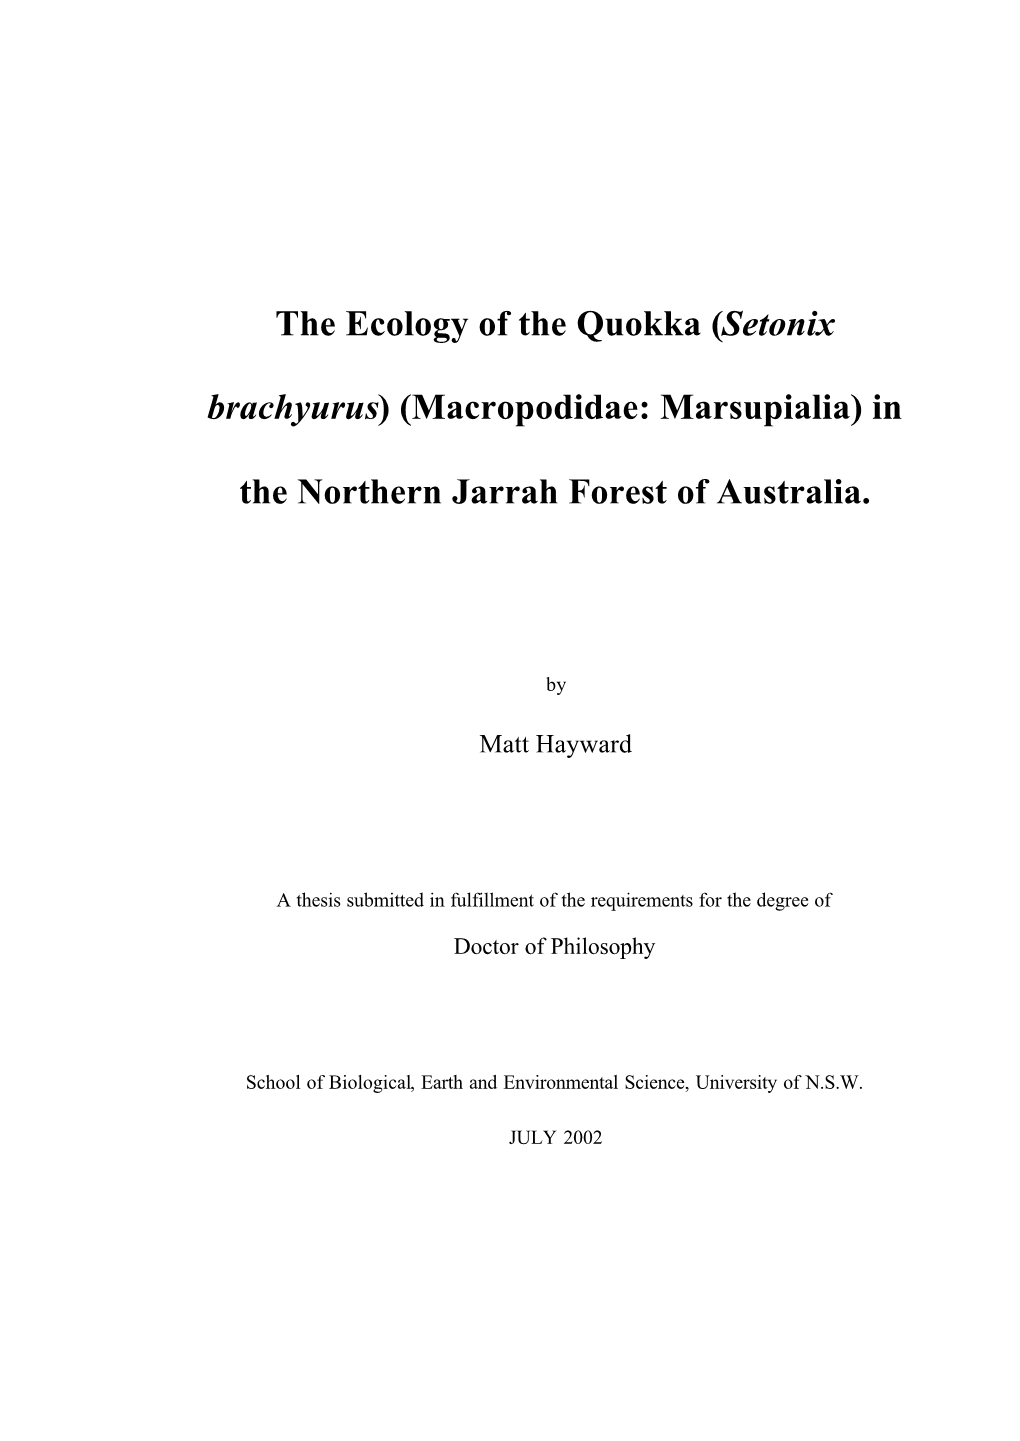 The Ecology of the Quokka (Setonix Brachyurus) (Macropodidae: Marsupialia) in the Northern Jarrah Forest of Australia